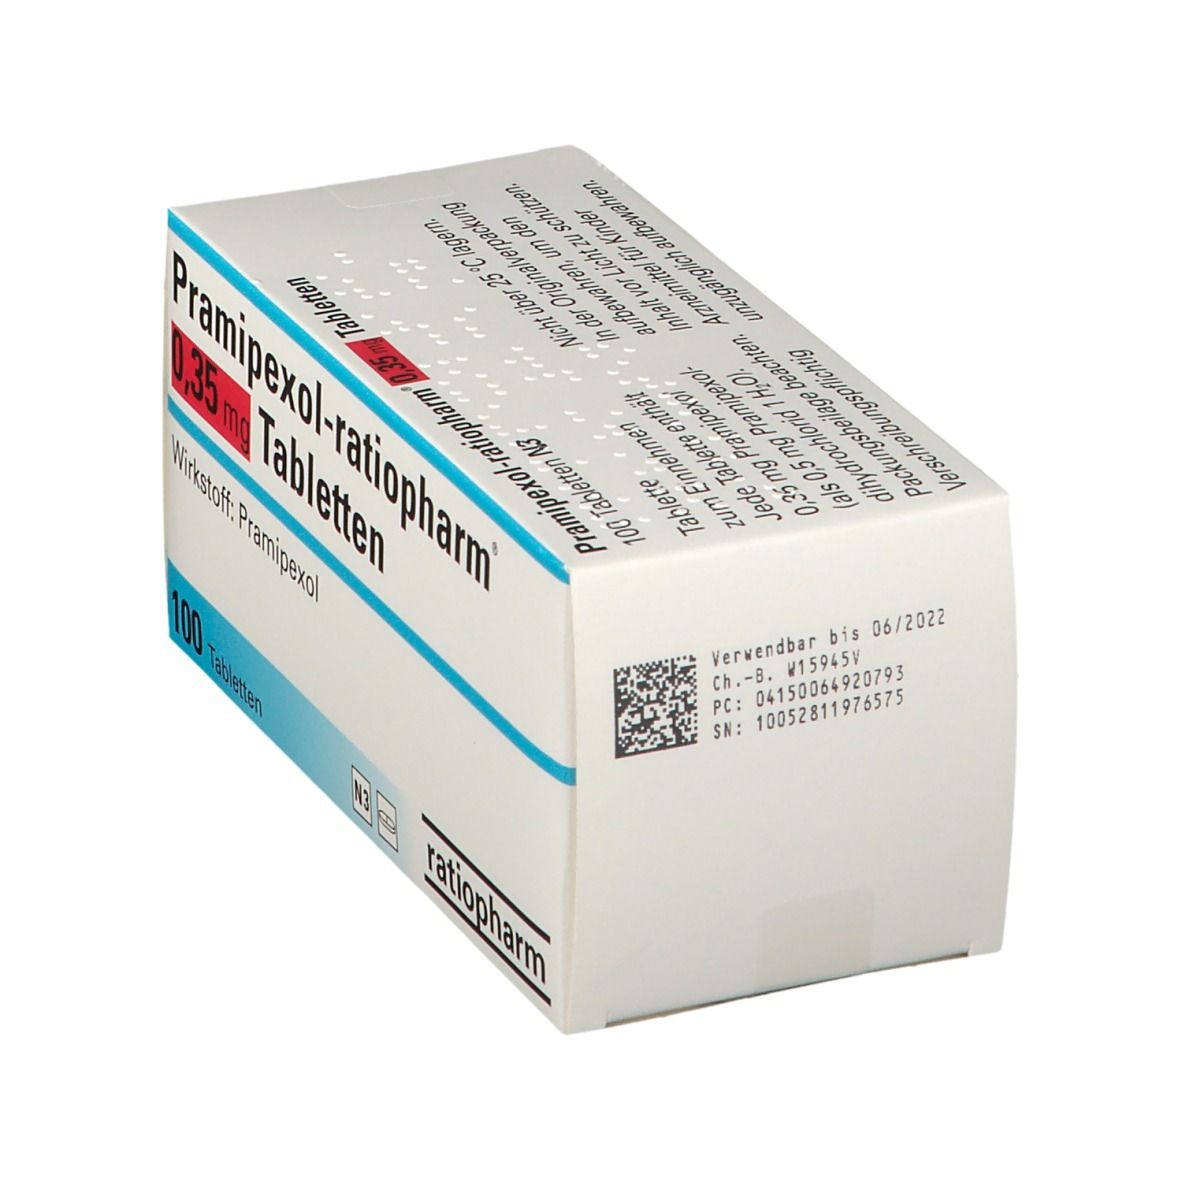 Pramipexol-ratiopharm® 0,35 mg